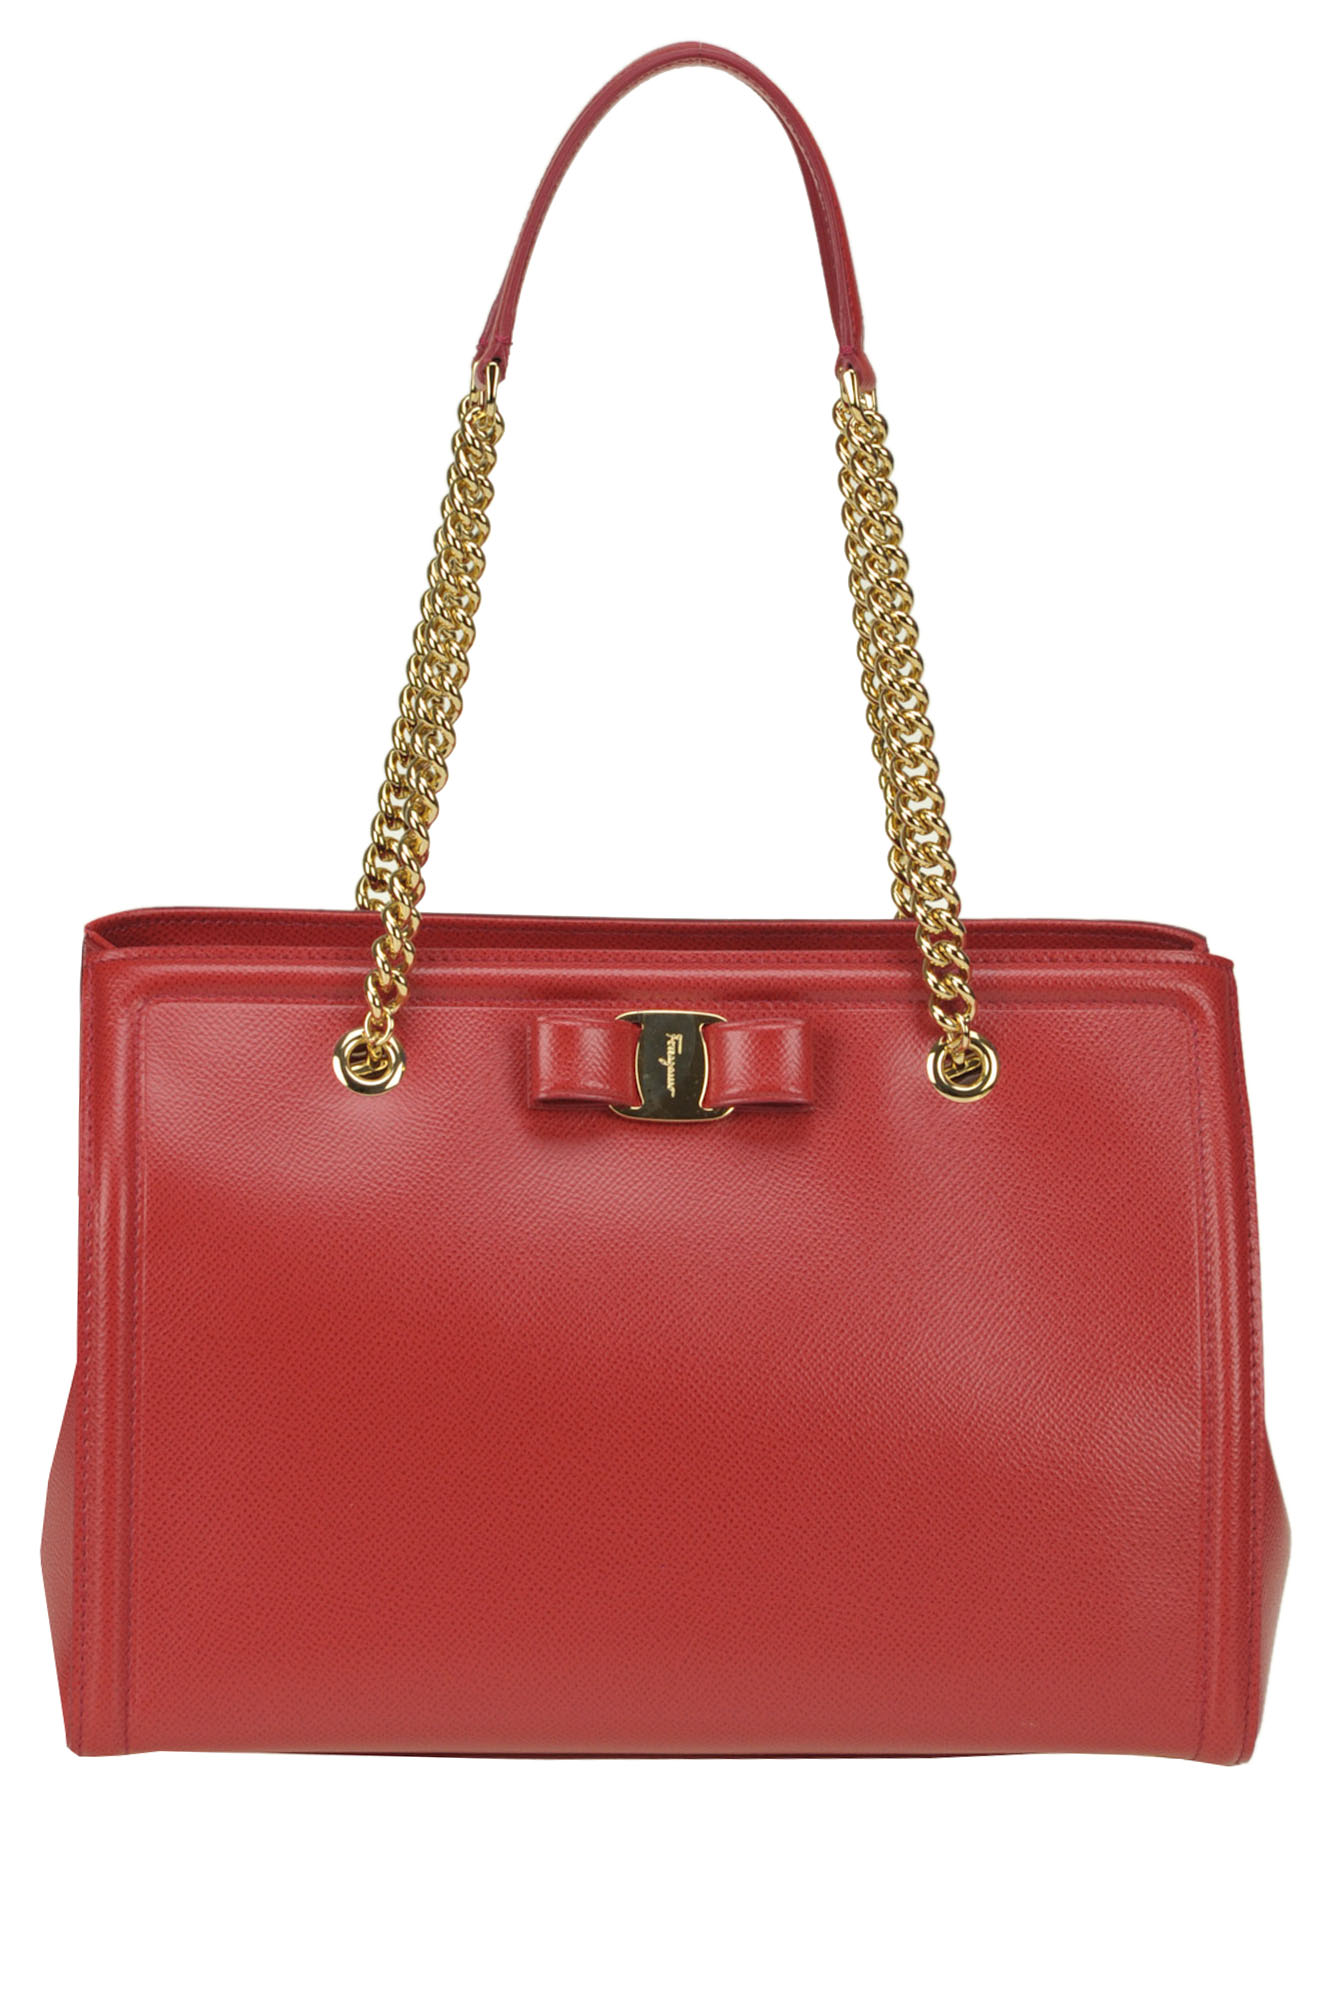 Ferragamo Melike Leather Bag In Red